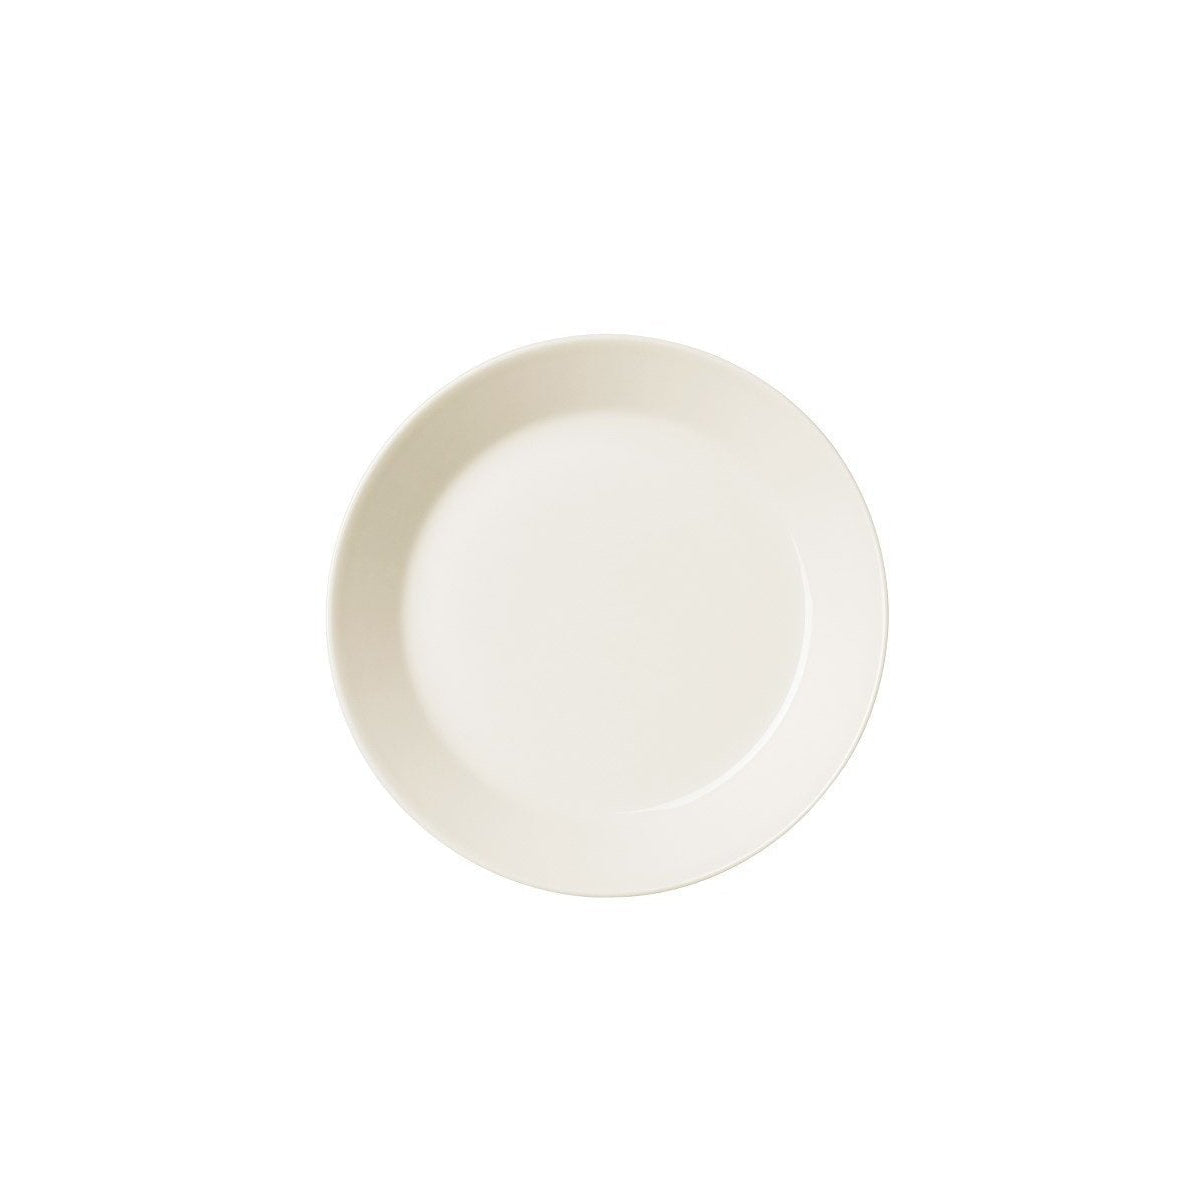 Iittala Teema Plate Flat White, 17 cm